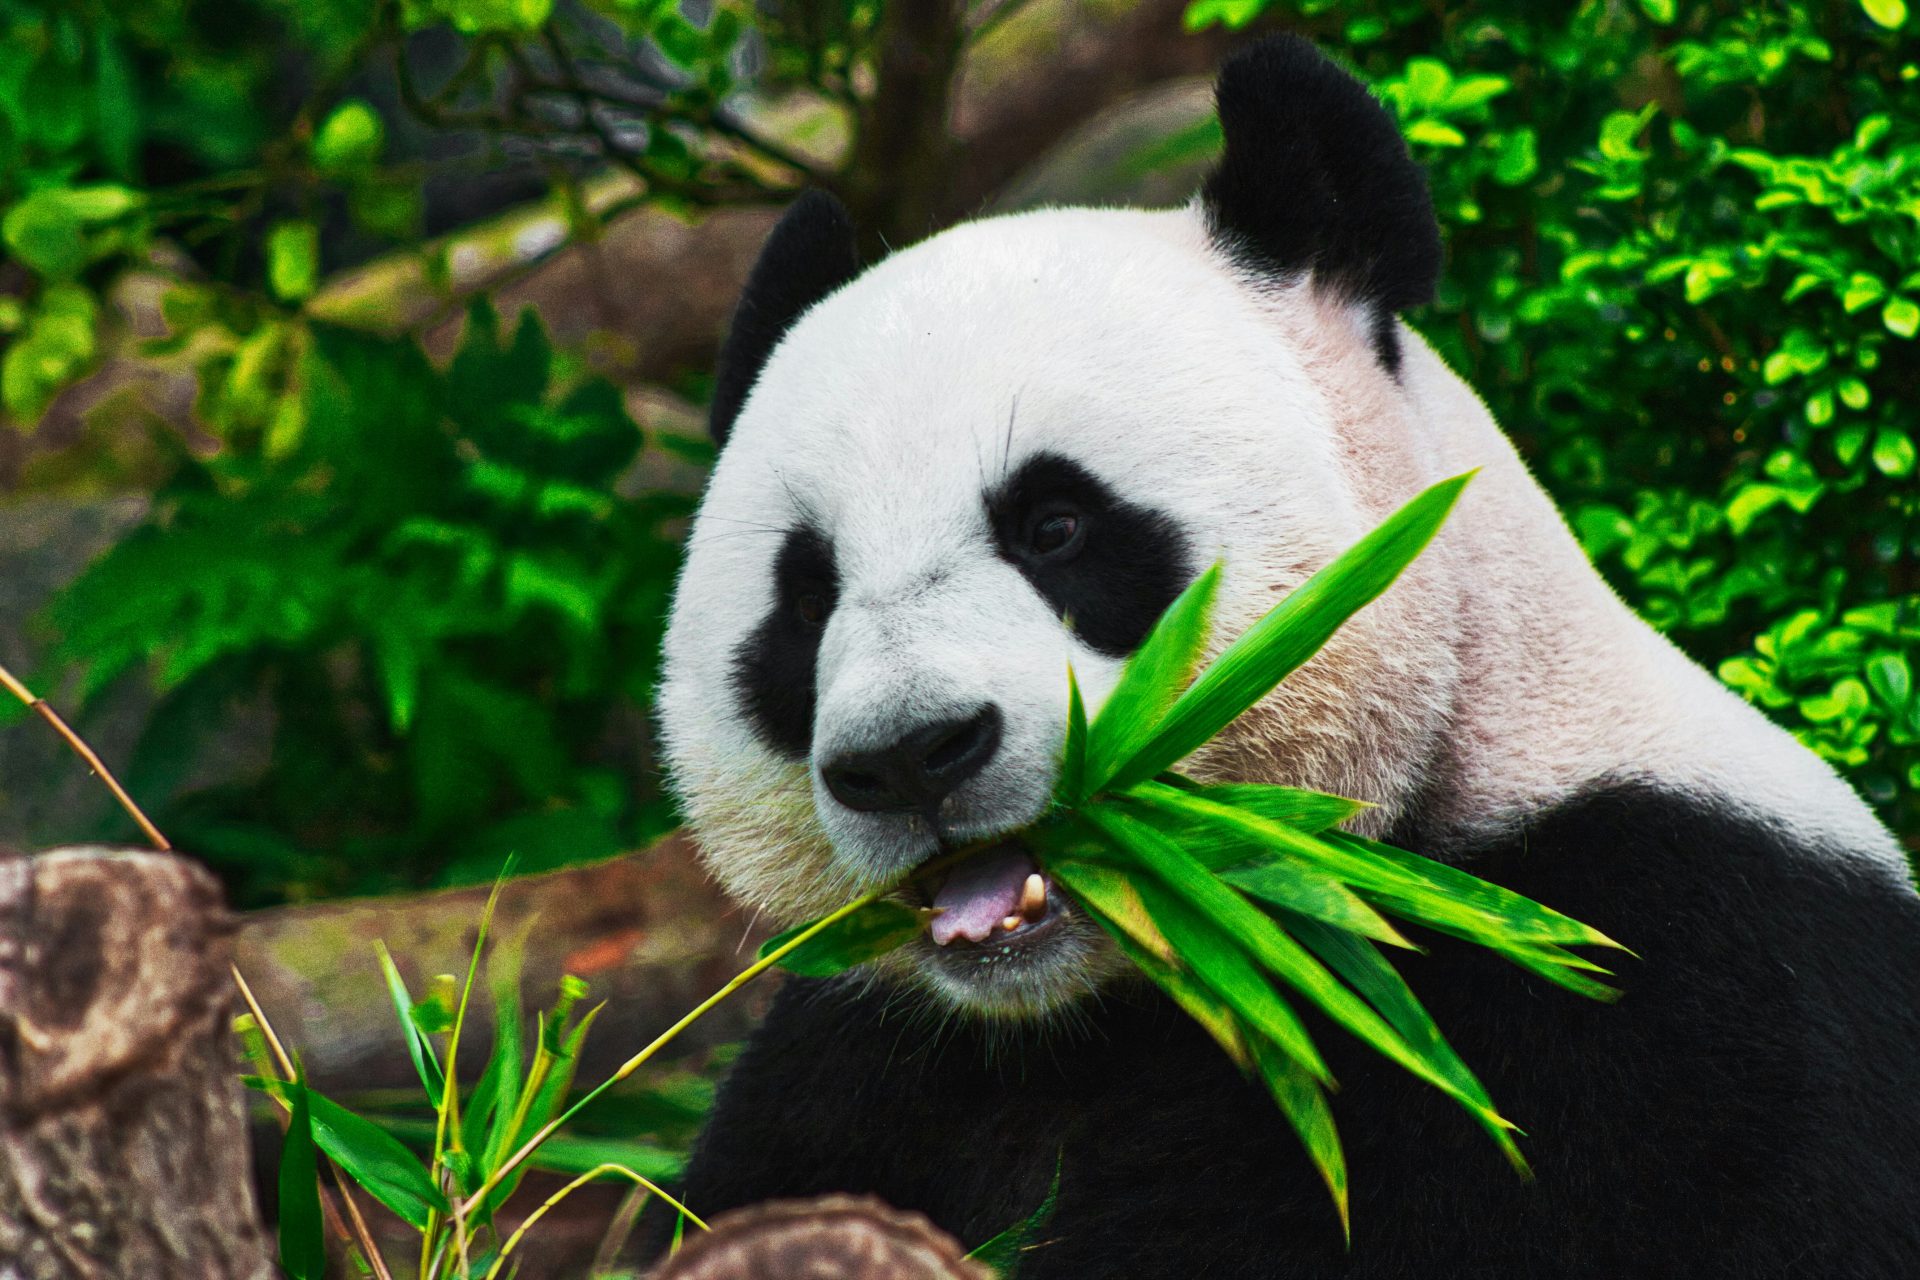 Infrastructure development has fragmented panda populations 